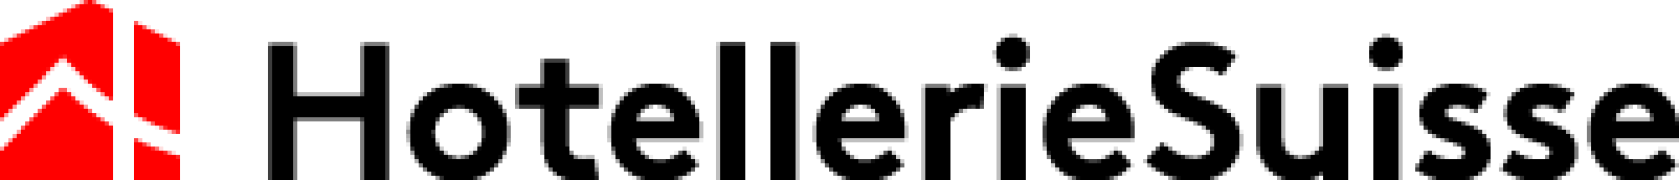 hs-logo-dachverband-rs-rgb_3.png